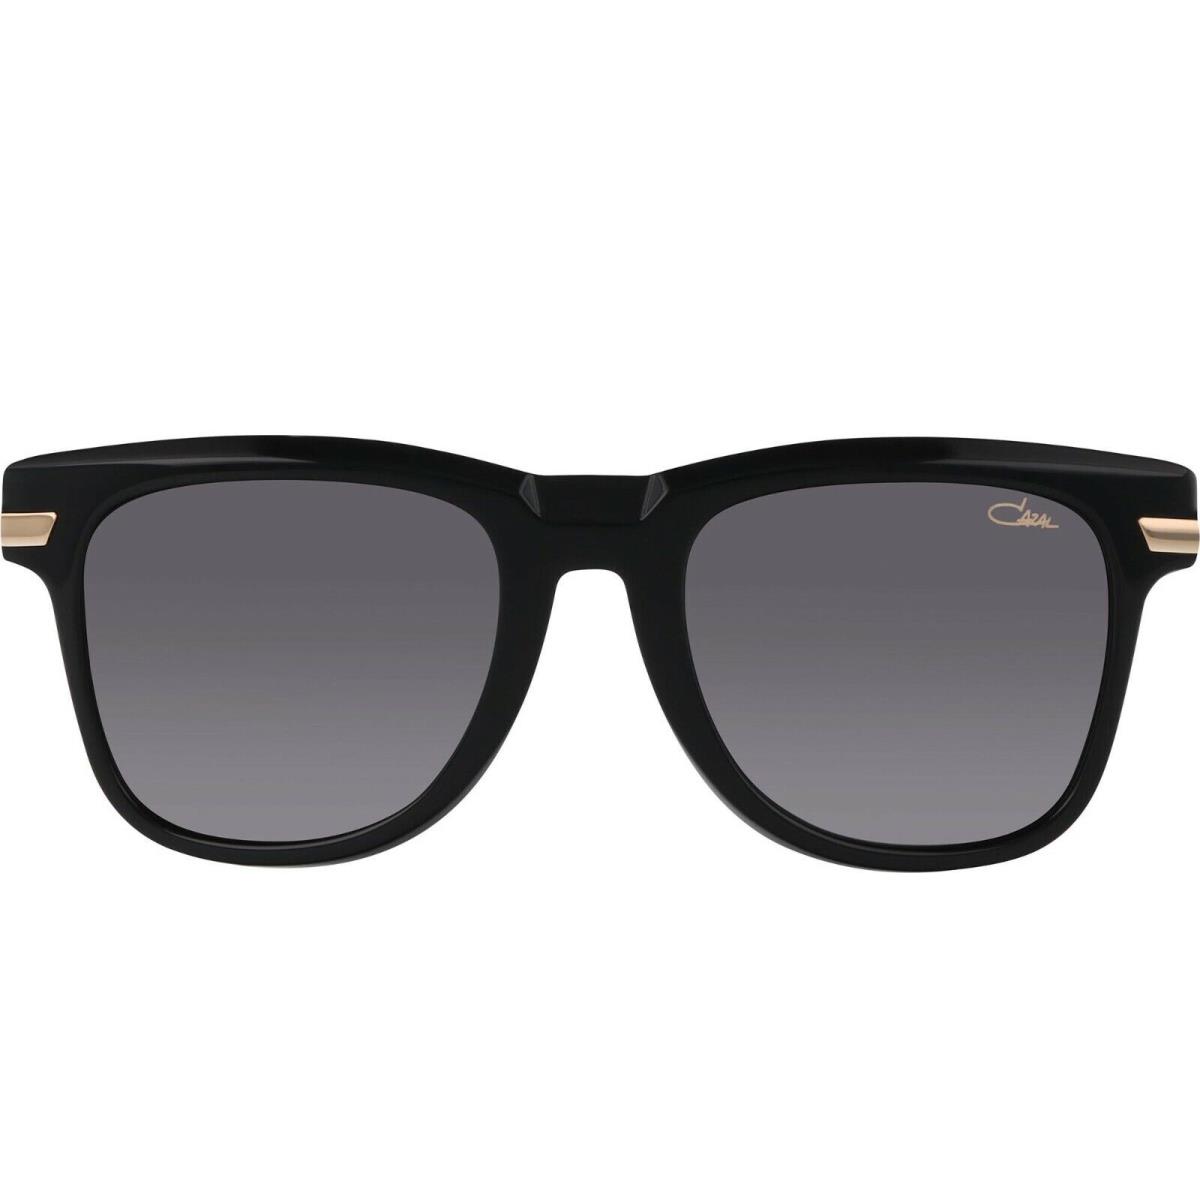 Cazal 8041 Black Gold/grey 001 Sunglasses